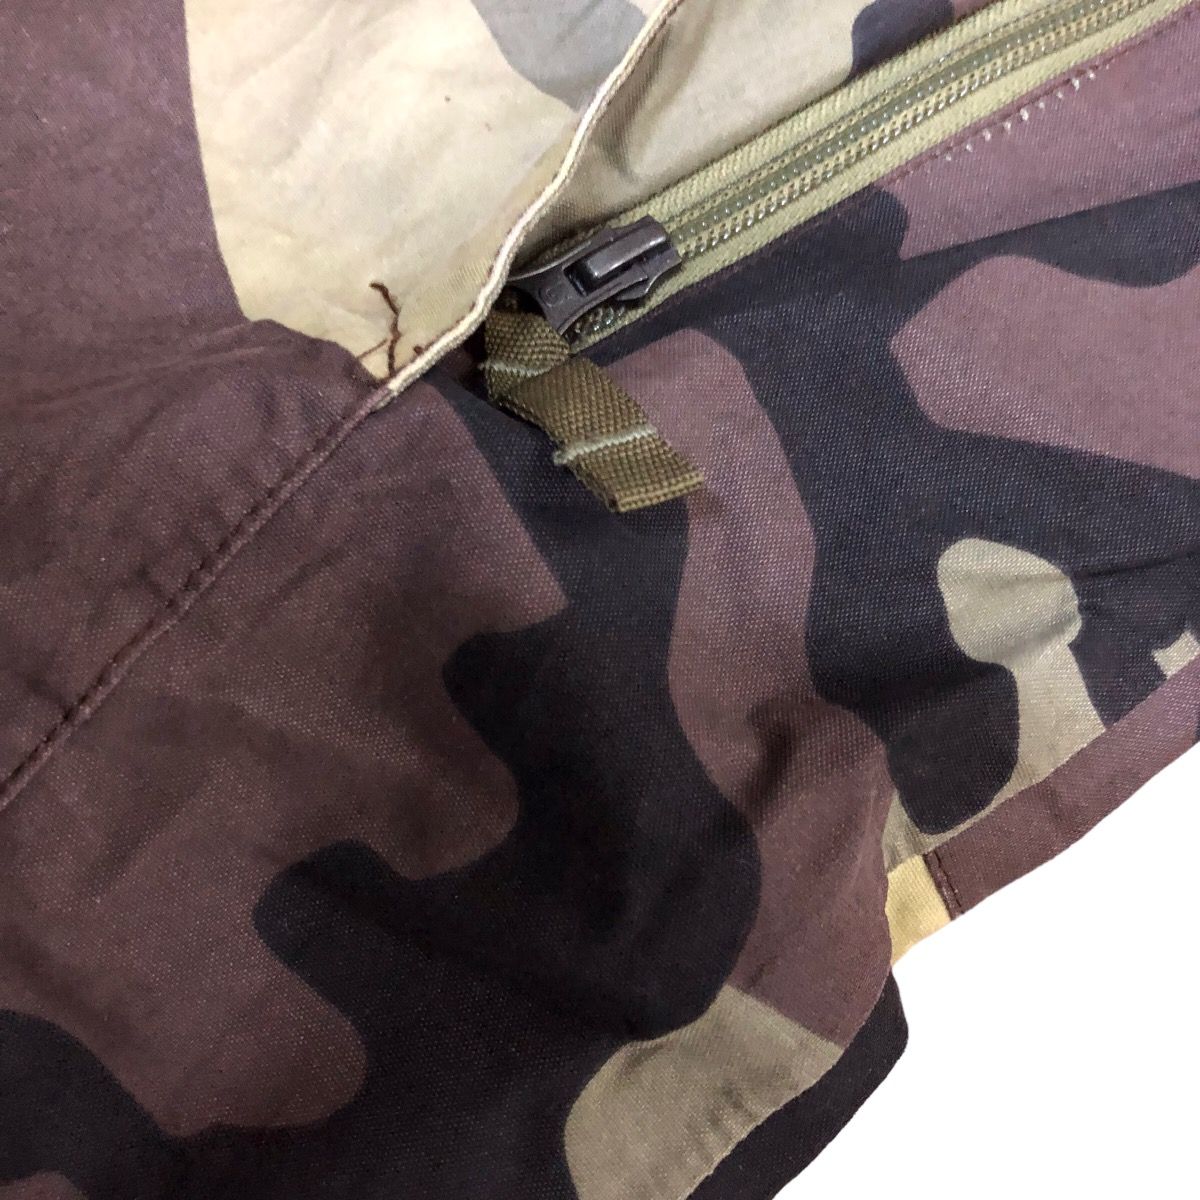 Ronin burton dryride outerwear camouflage snowboard pants - 6